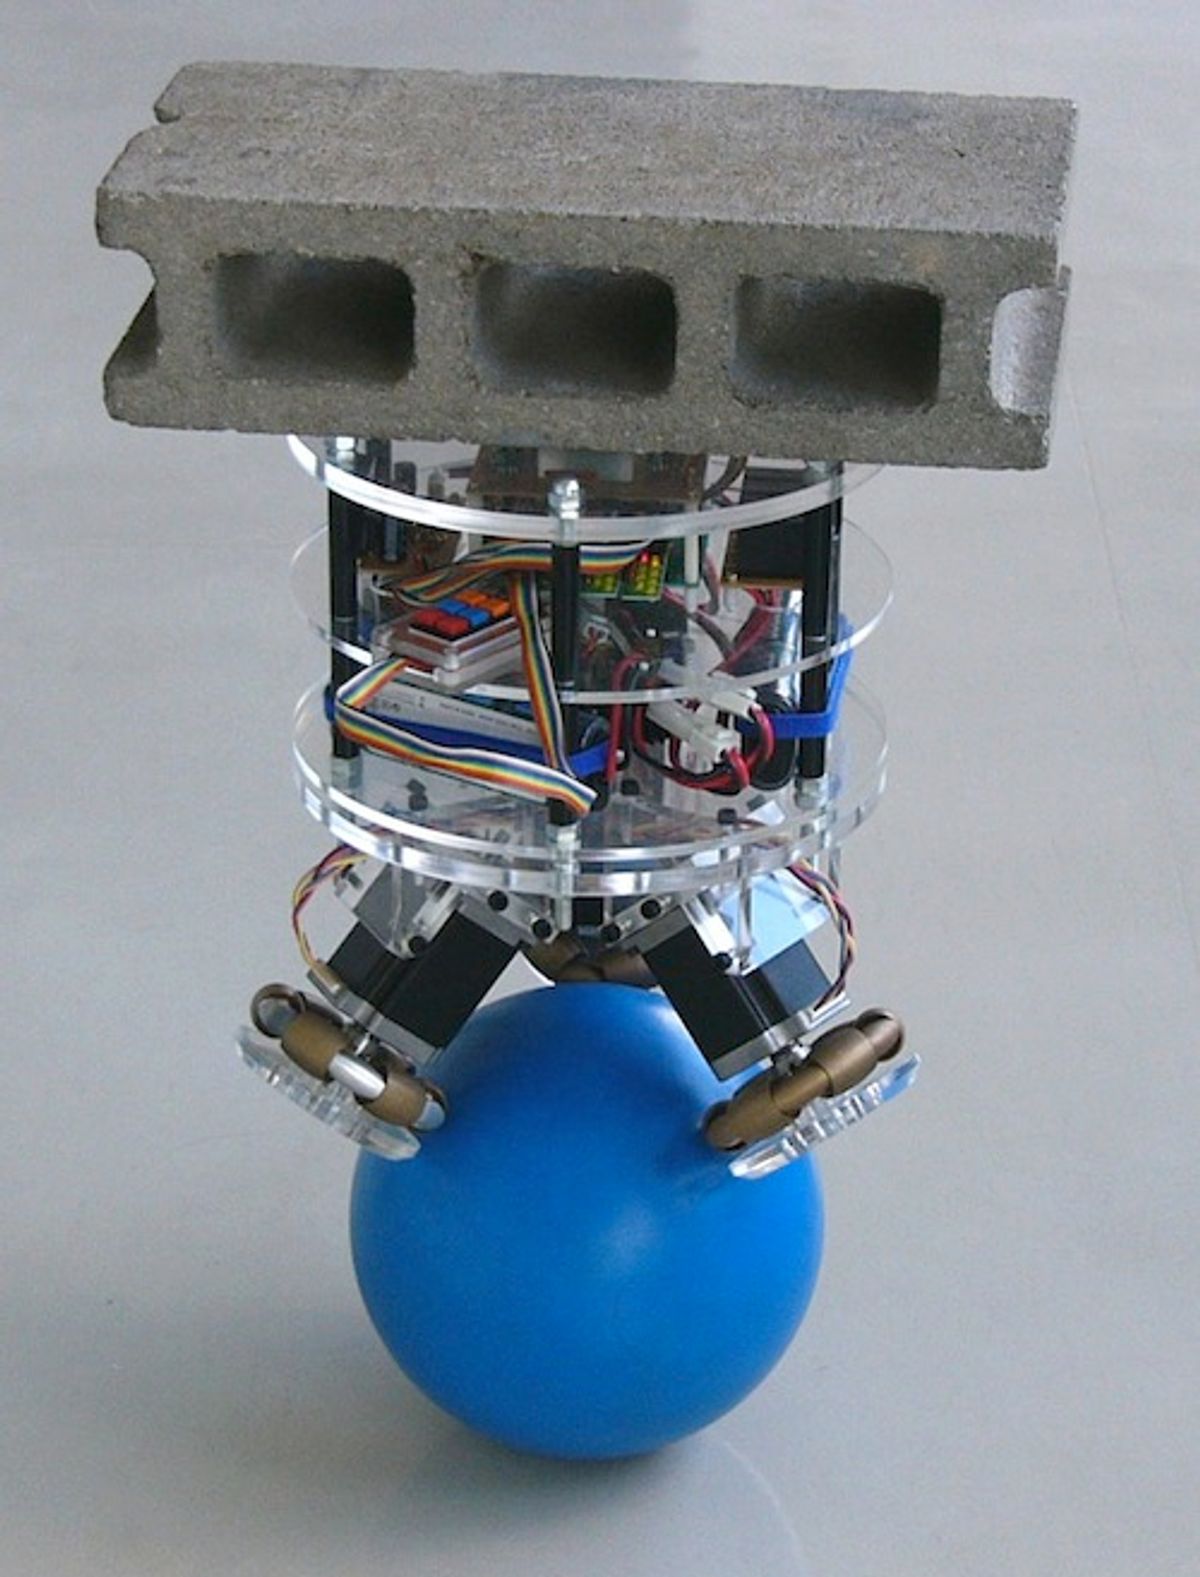 A Robot That Balances on a Ball